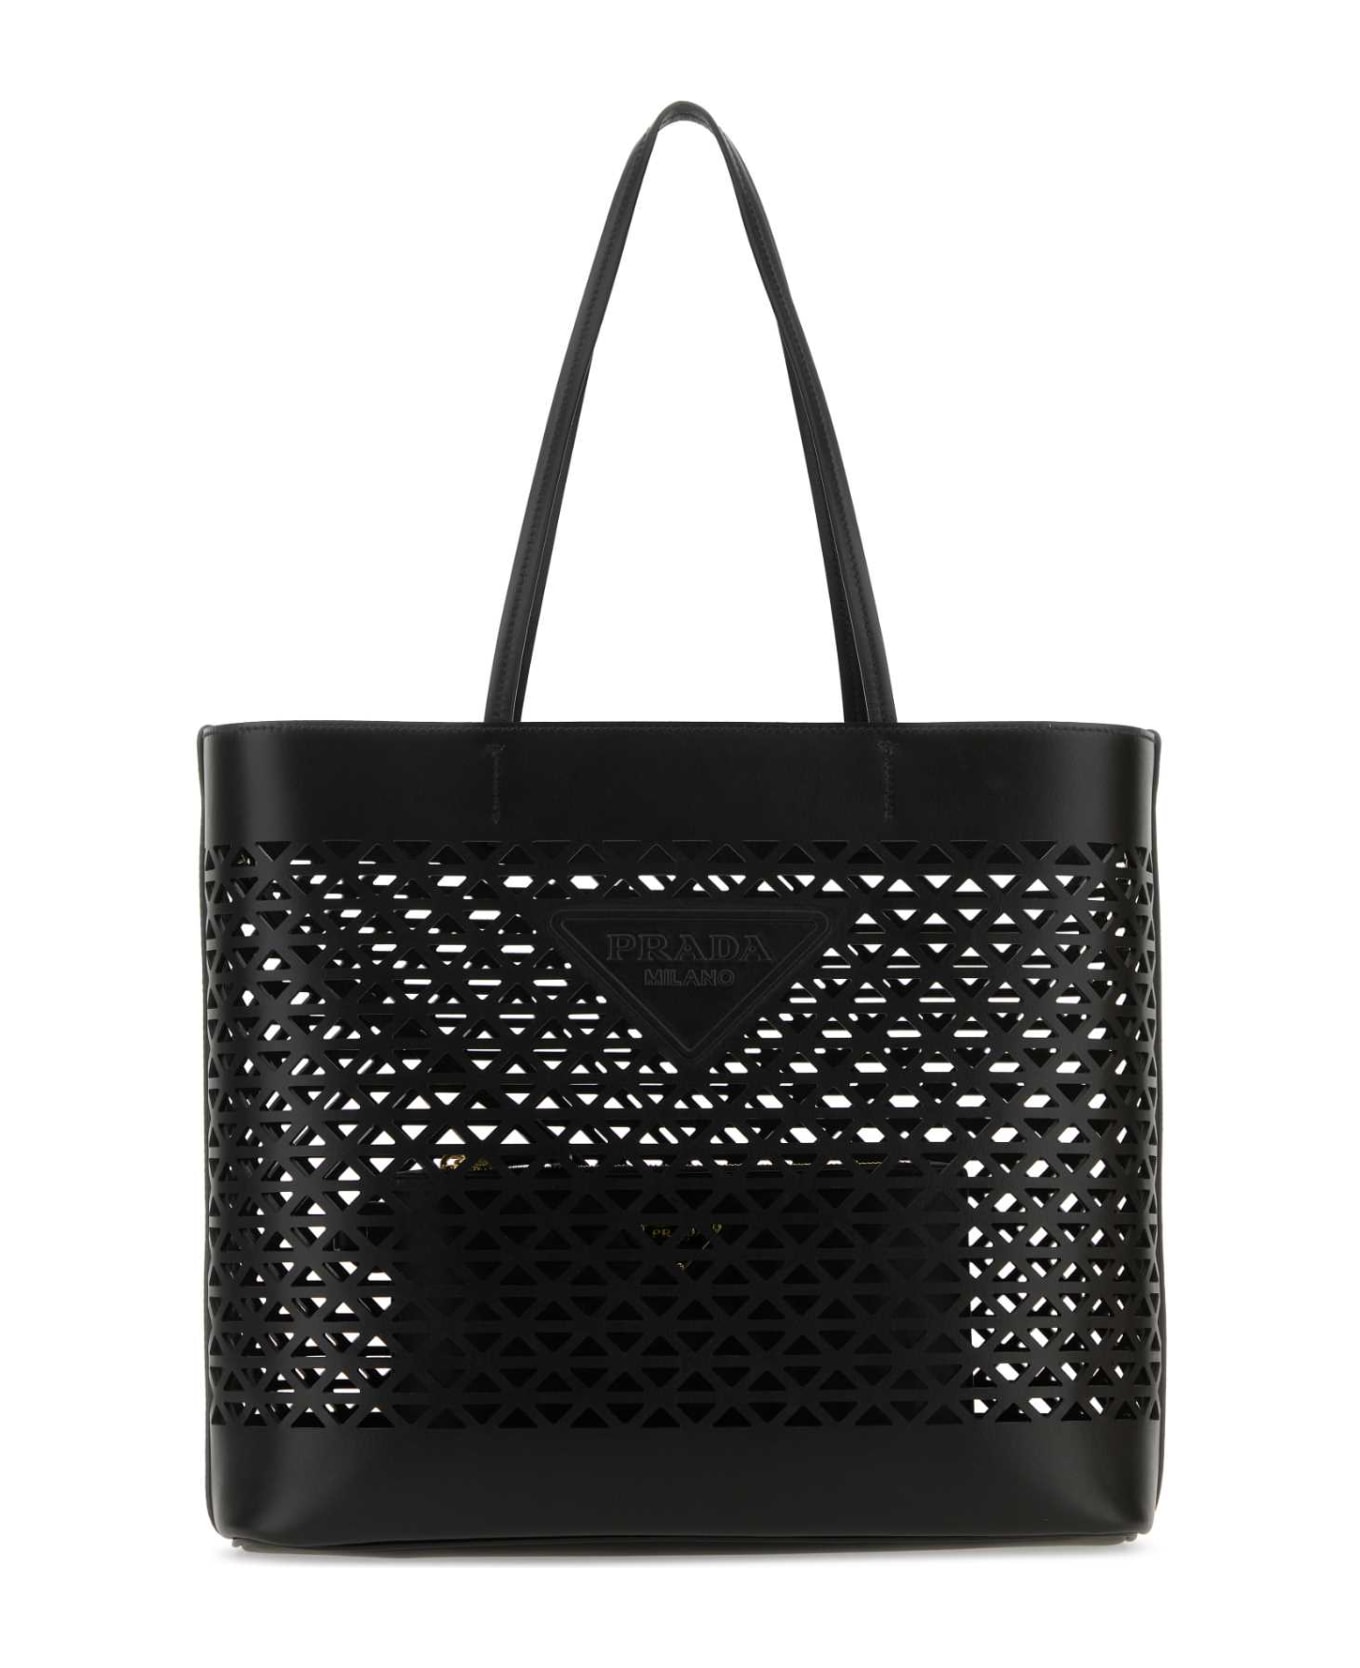 Prada Black Leather Shopping Bag - NERO